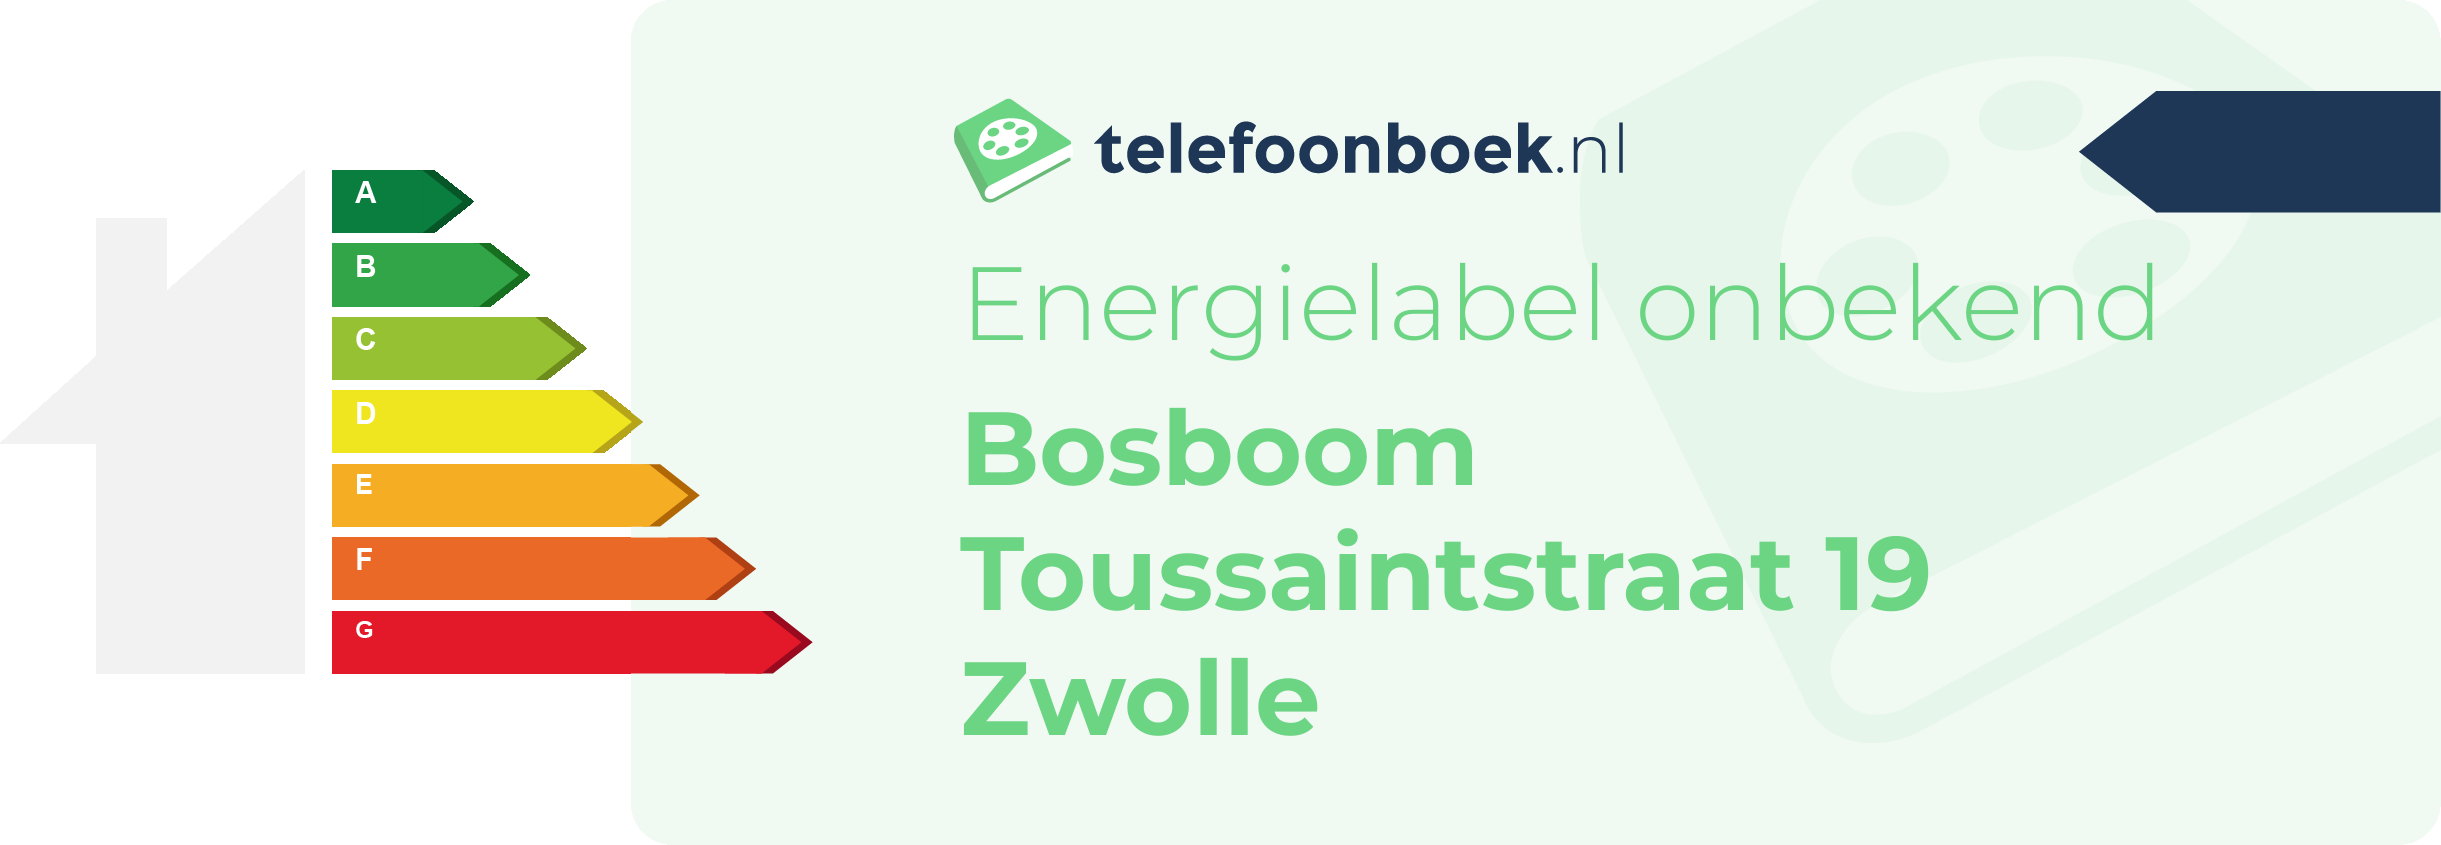 Energielabel Bosboom Toussaintstraat 19 Zwolle